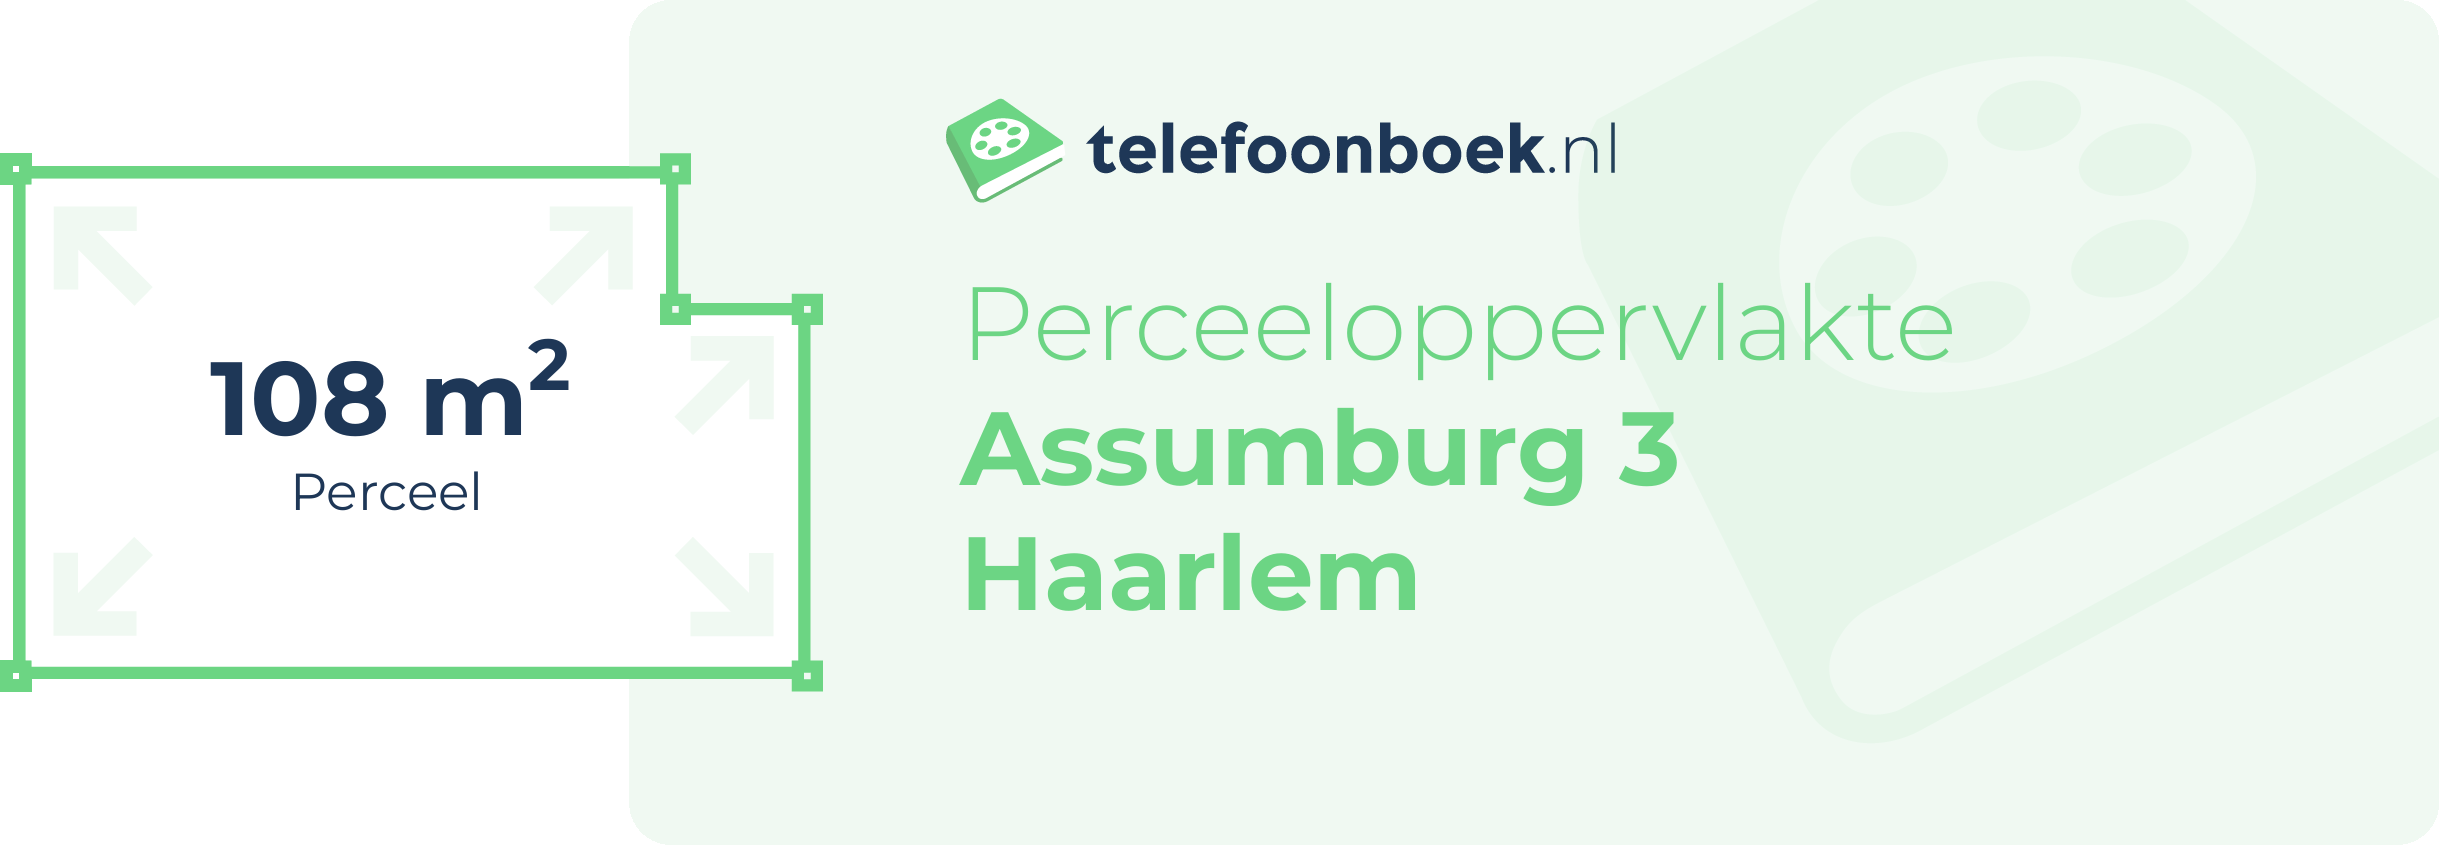 Perceeloppervlakte Assumburg 3 Haarlem